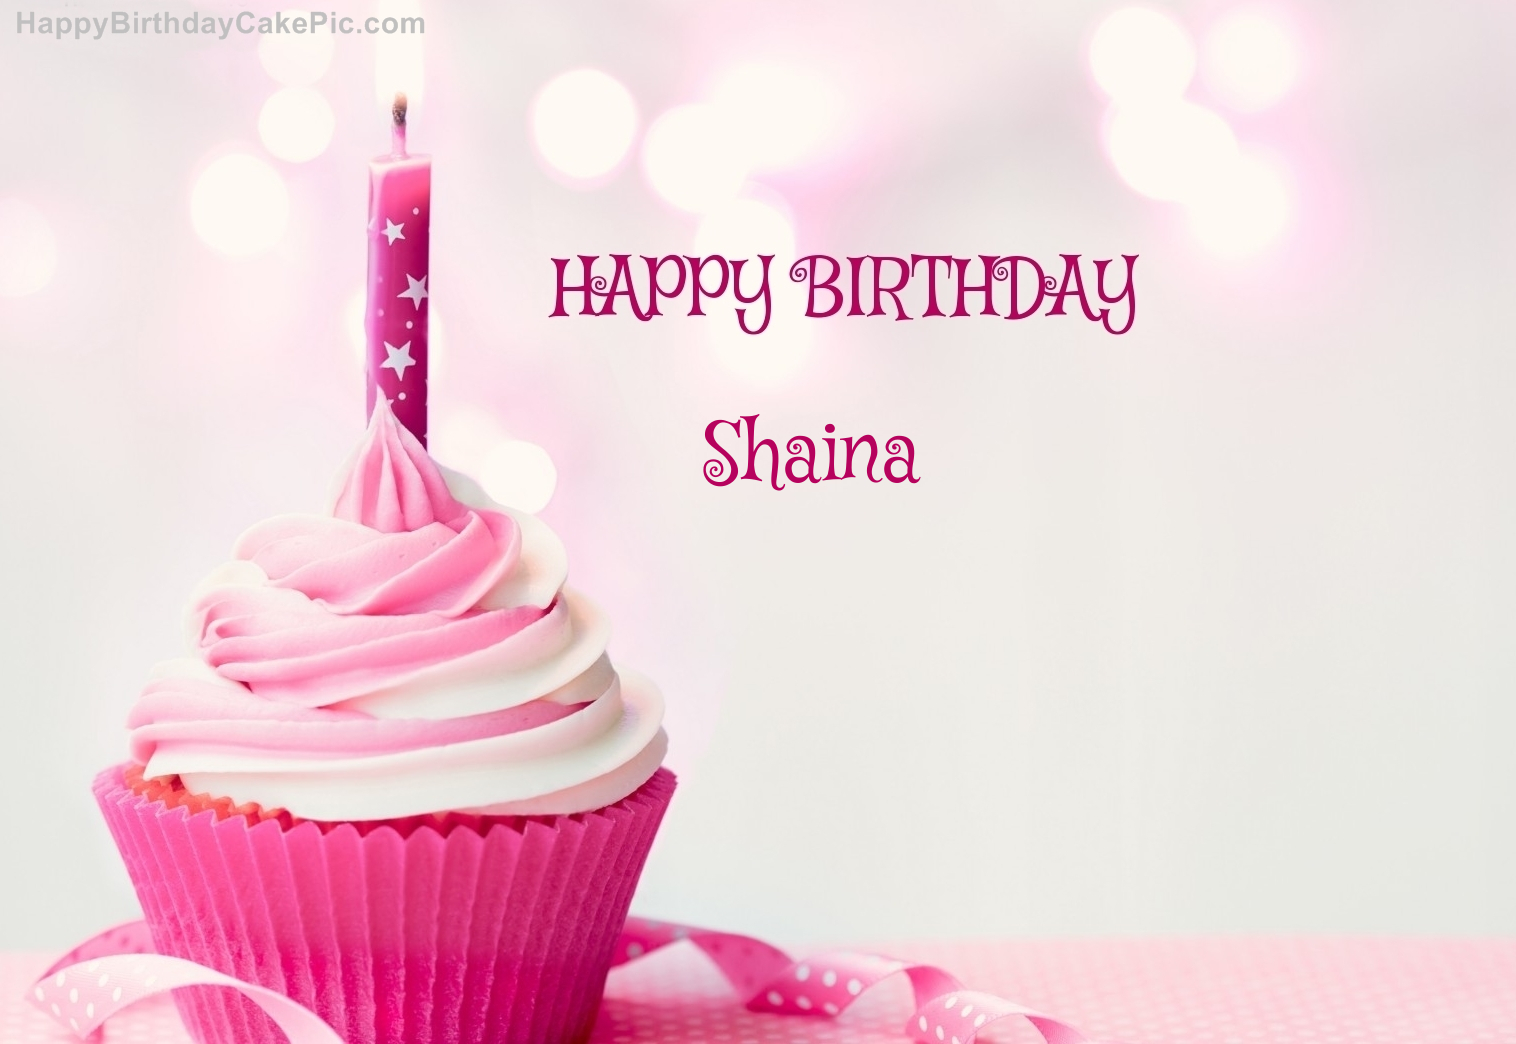 ️ Happy Birthday Cupcake Candle Pink Cake For Shaina